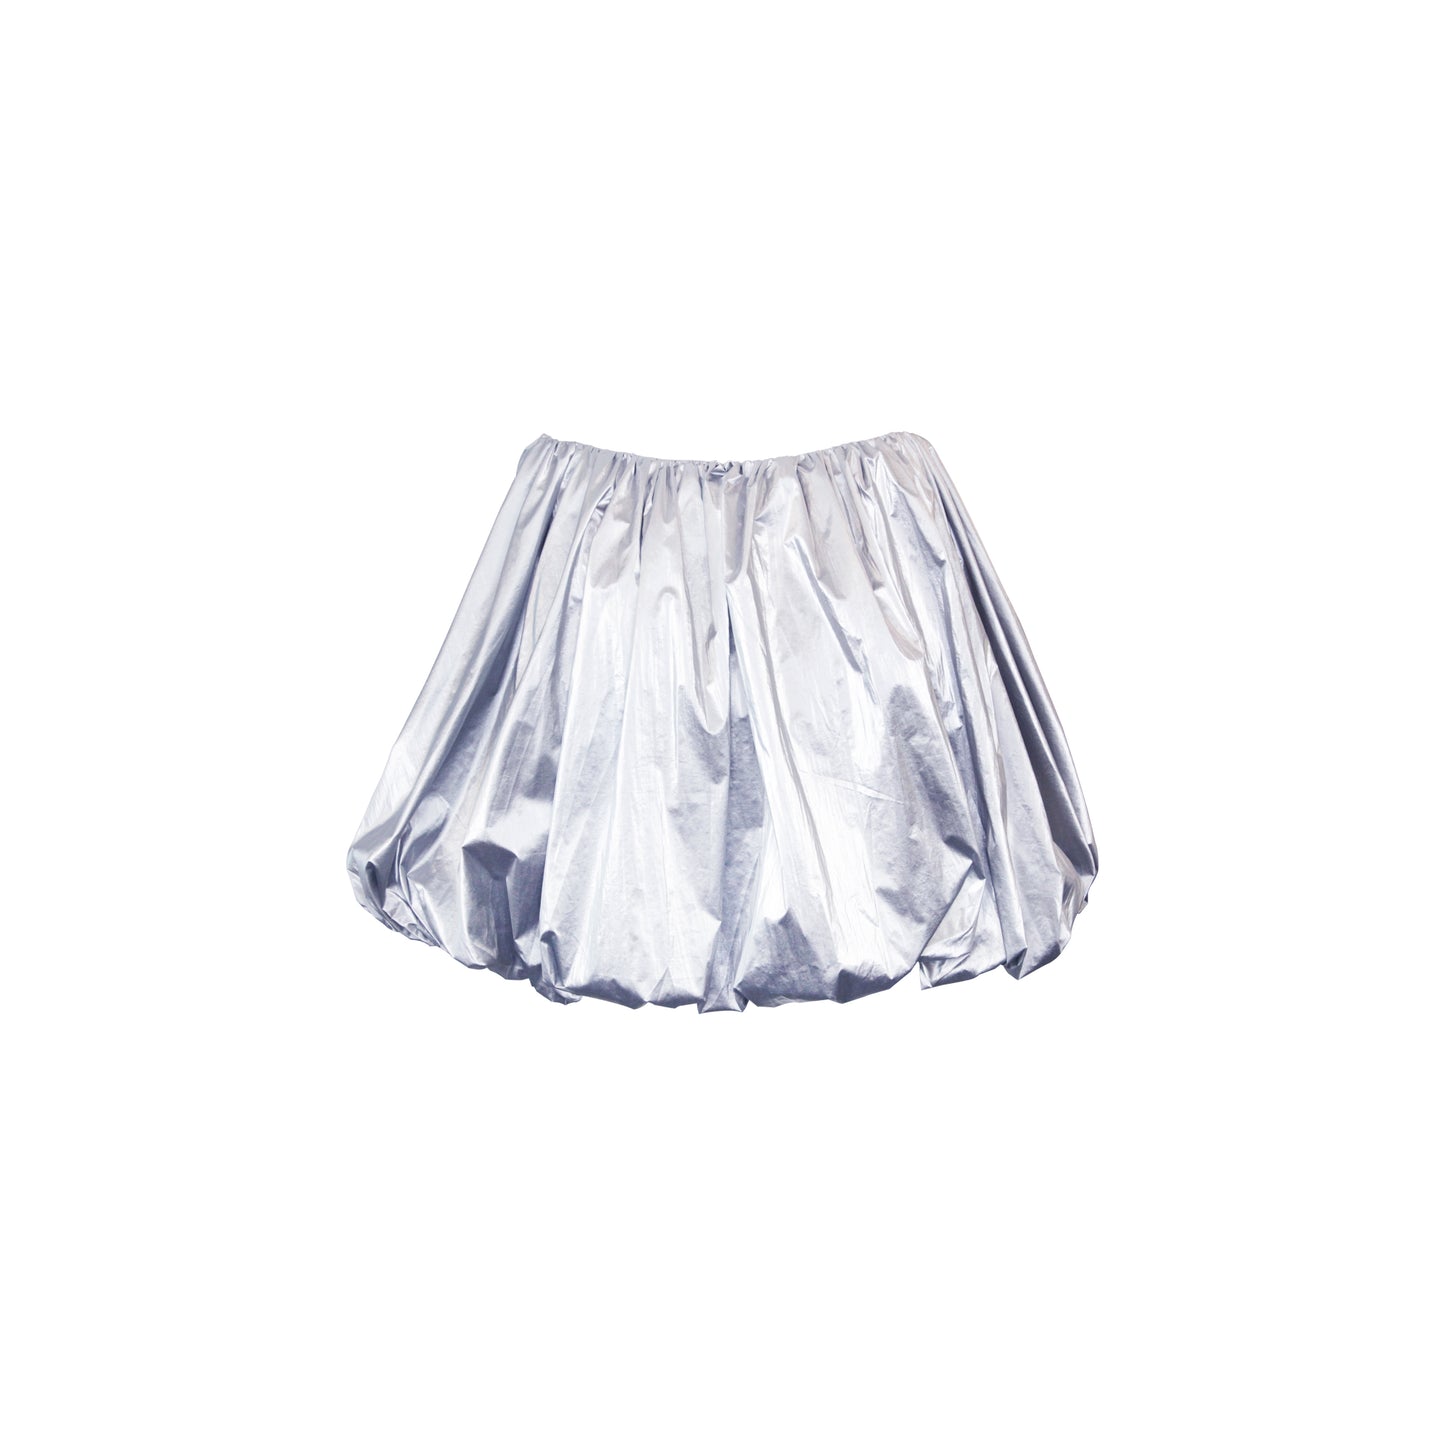 DANSHUU Pearlescent Grey Bubble Skirt